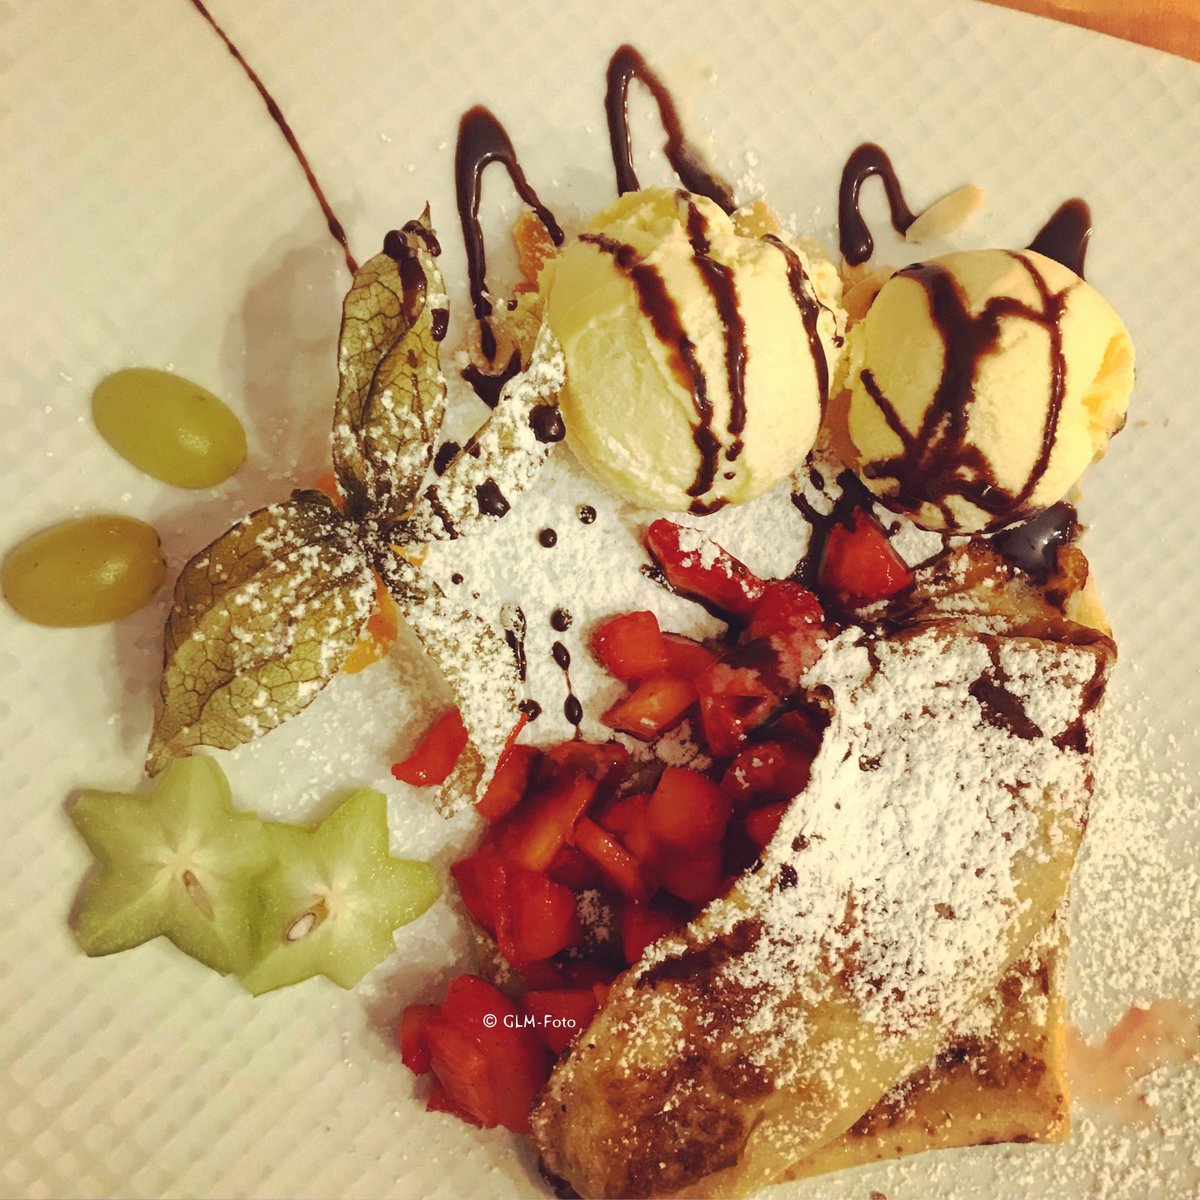 #Top4Theme for this week is #Top4Sweet. Here's my sweet stuff

#SouthTyrol #icecream 
#Merano #pancake
#DorfTirol #apricot #dumplings 
#Bavaria #dessert (icecream and #fruits)

@Touchse @perthtravelers @CharlesMcCool @Giselleinmotion 

#delicious #Foodies #sweets